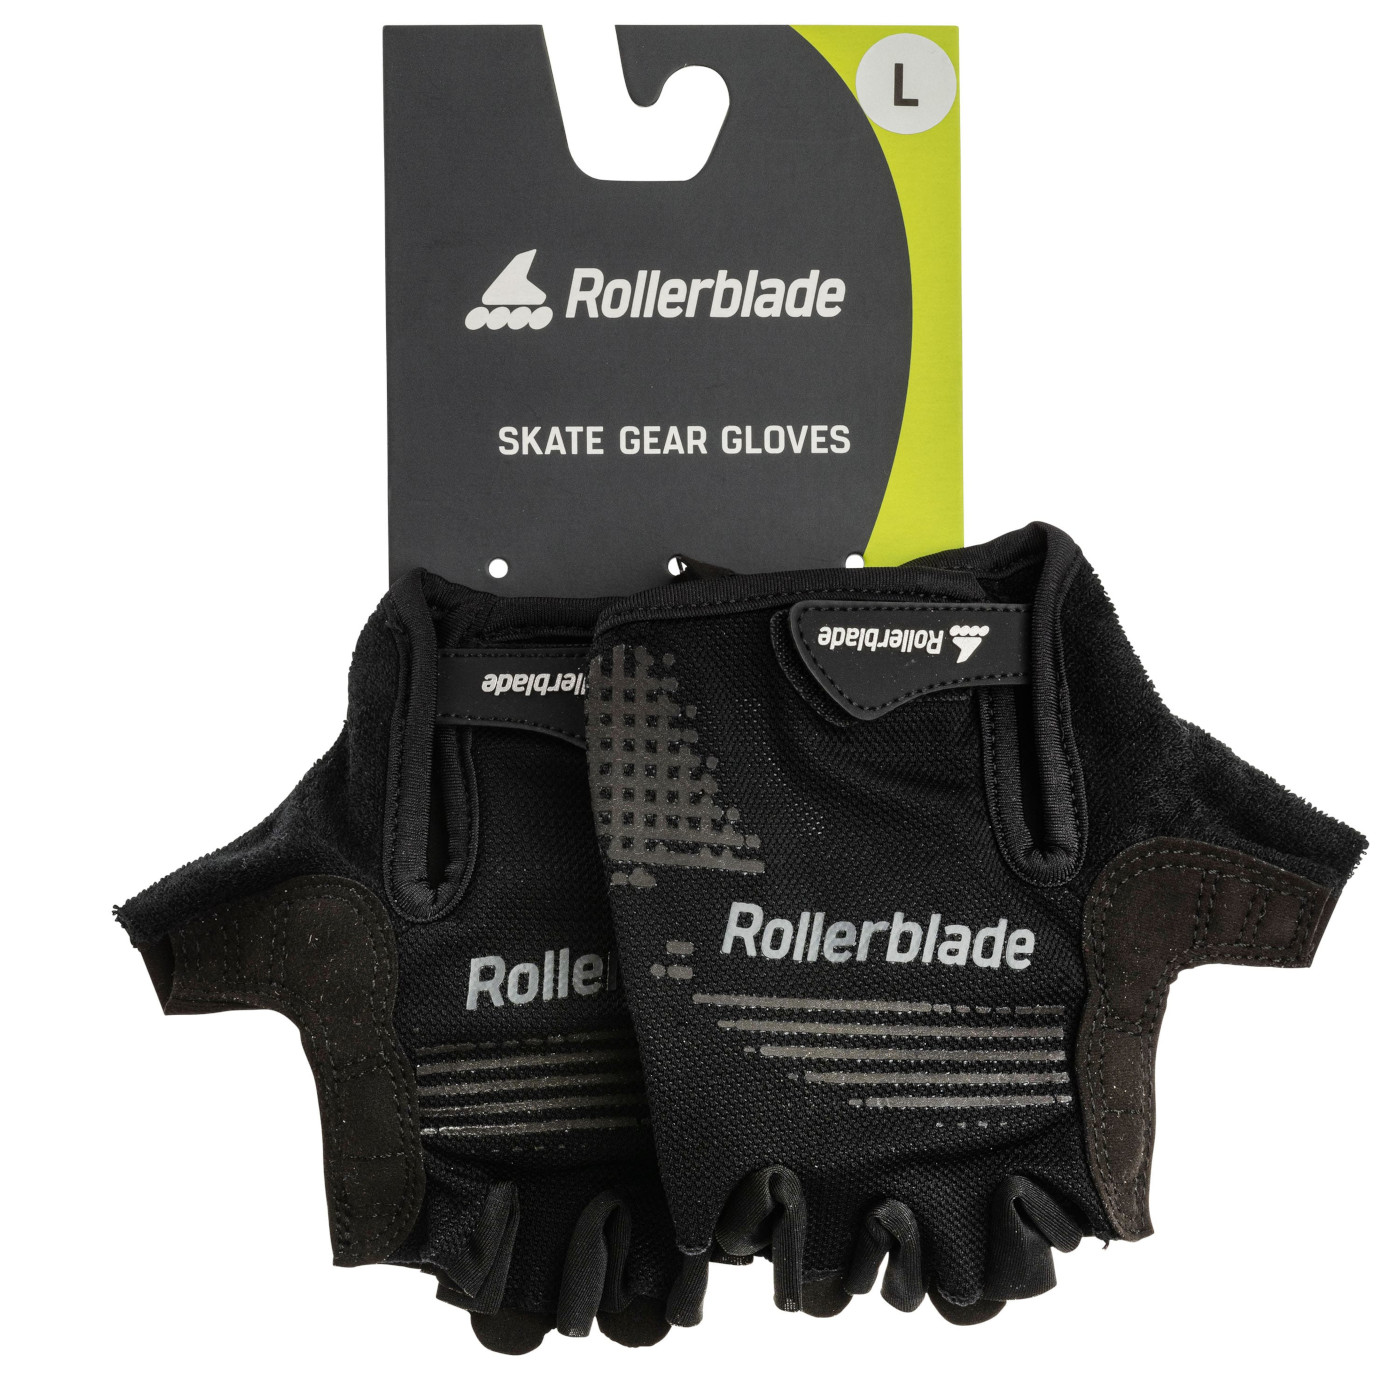 Imagen de Rollerblade Skate Gear Gloves - Protectores de manos - negro